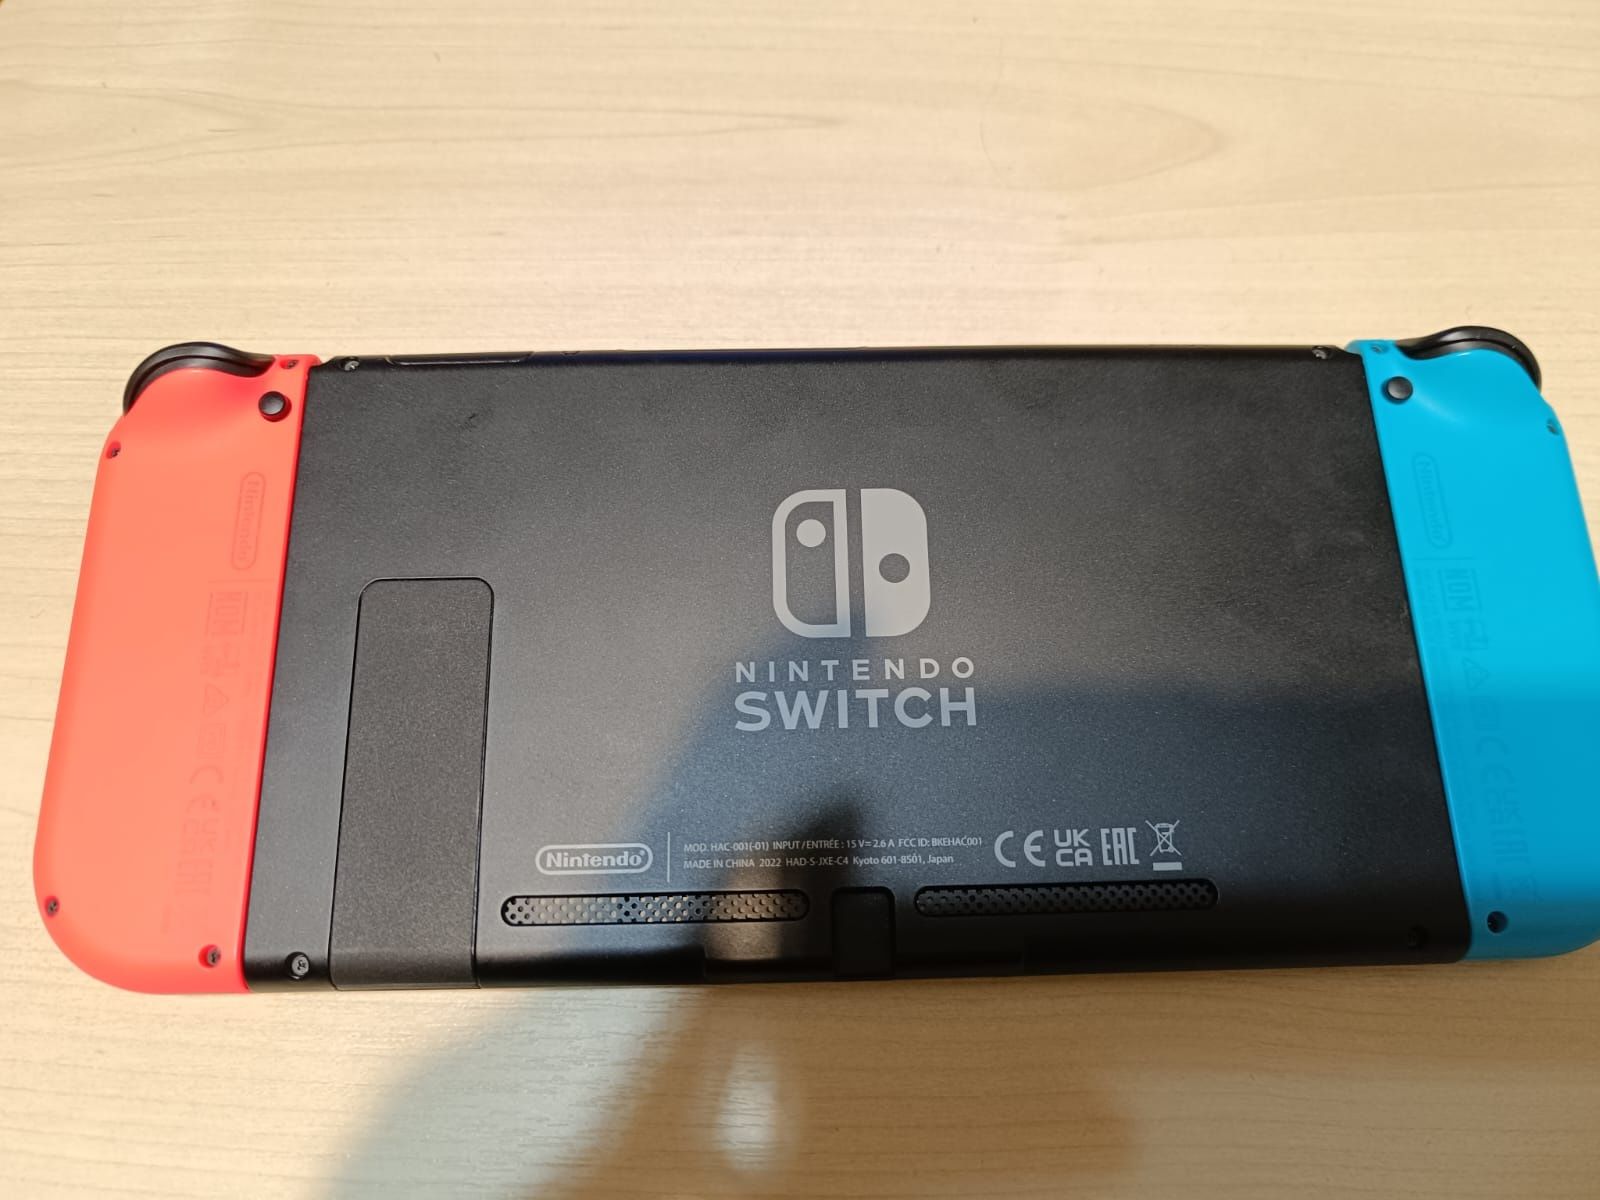 Consola Nintendo switch